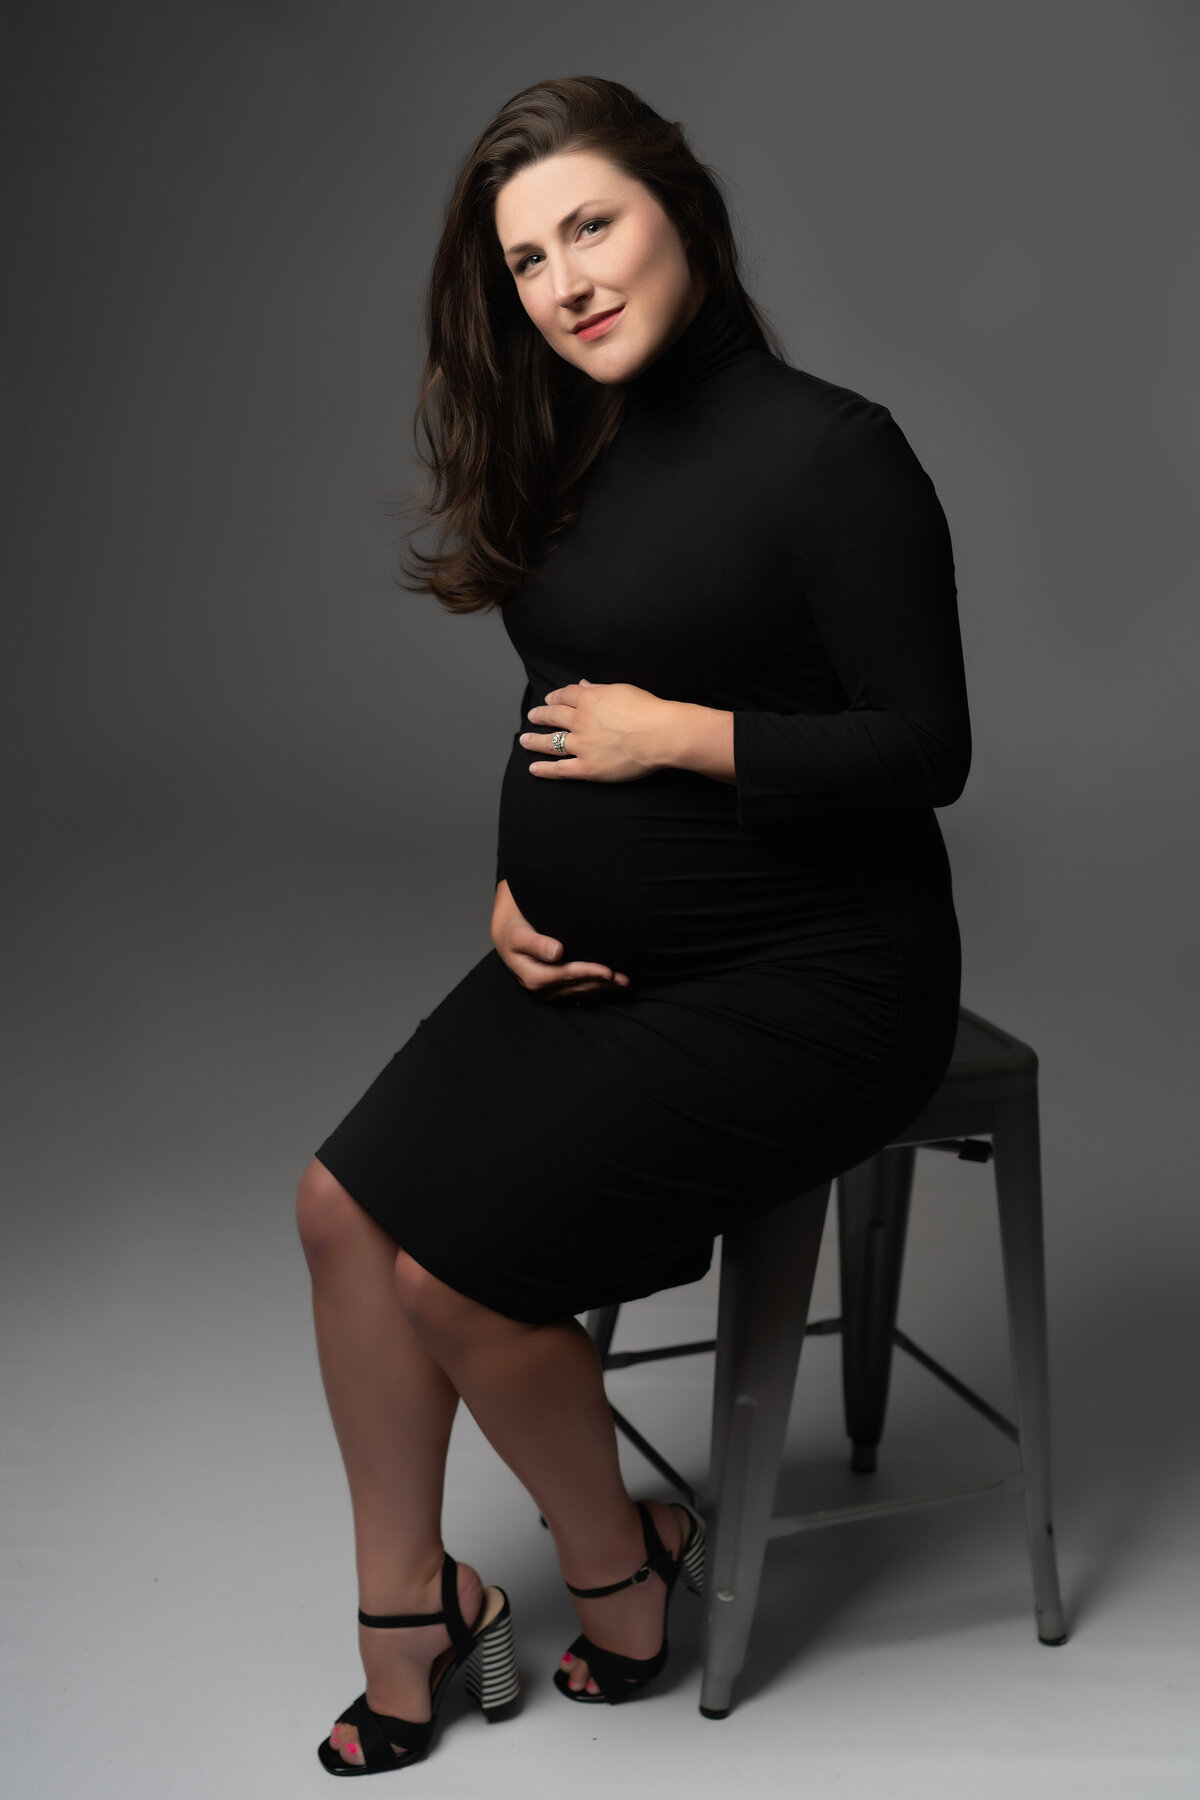 Stefanie Miller Photography Maternity Model Call02000